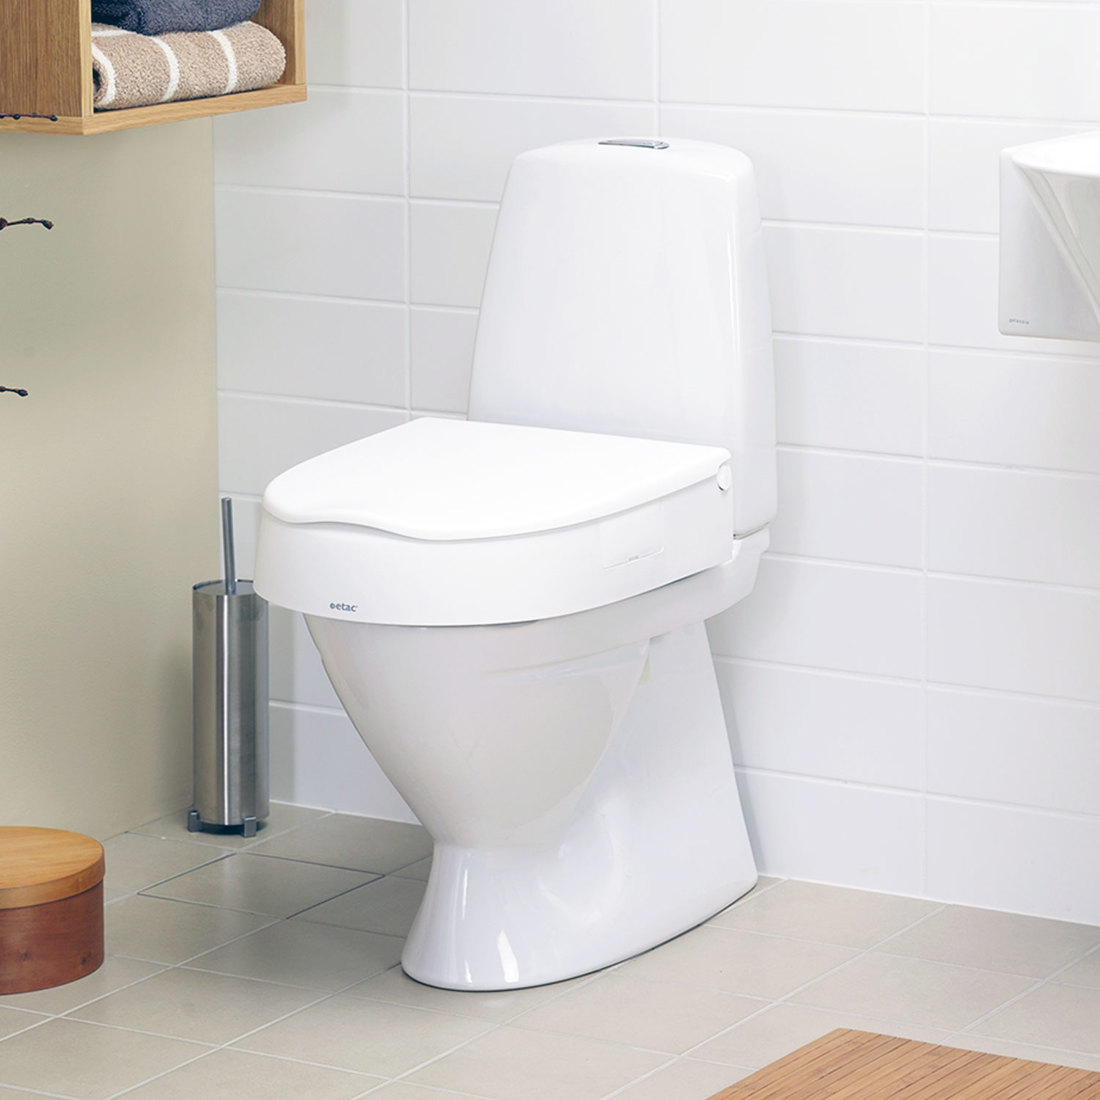 Cloo-without-armrest-bathroom.jpg